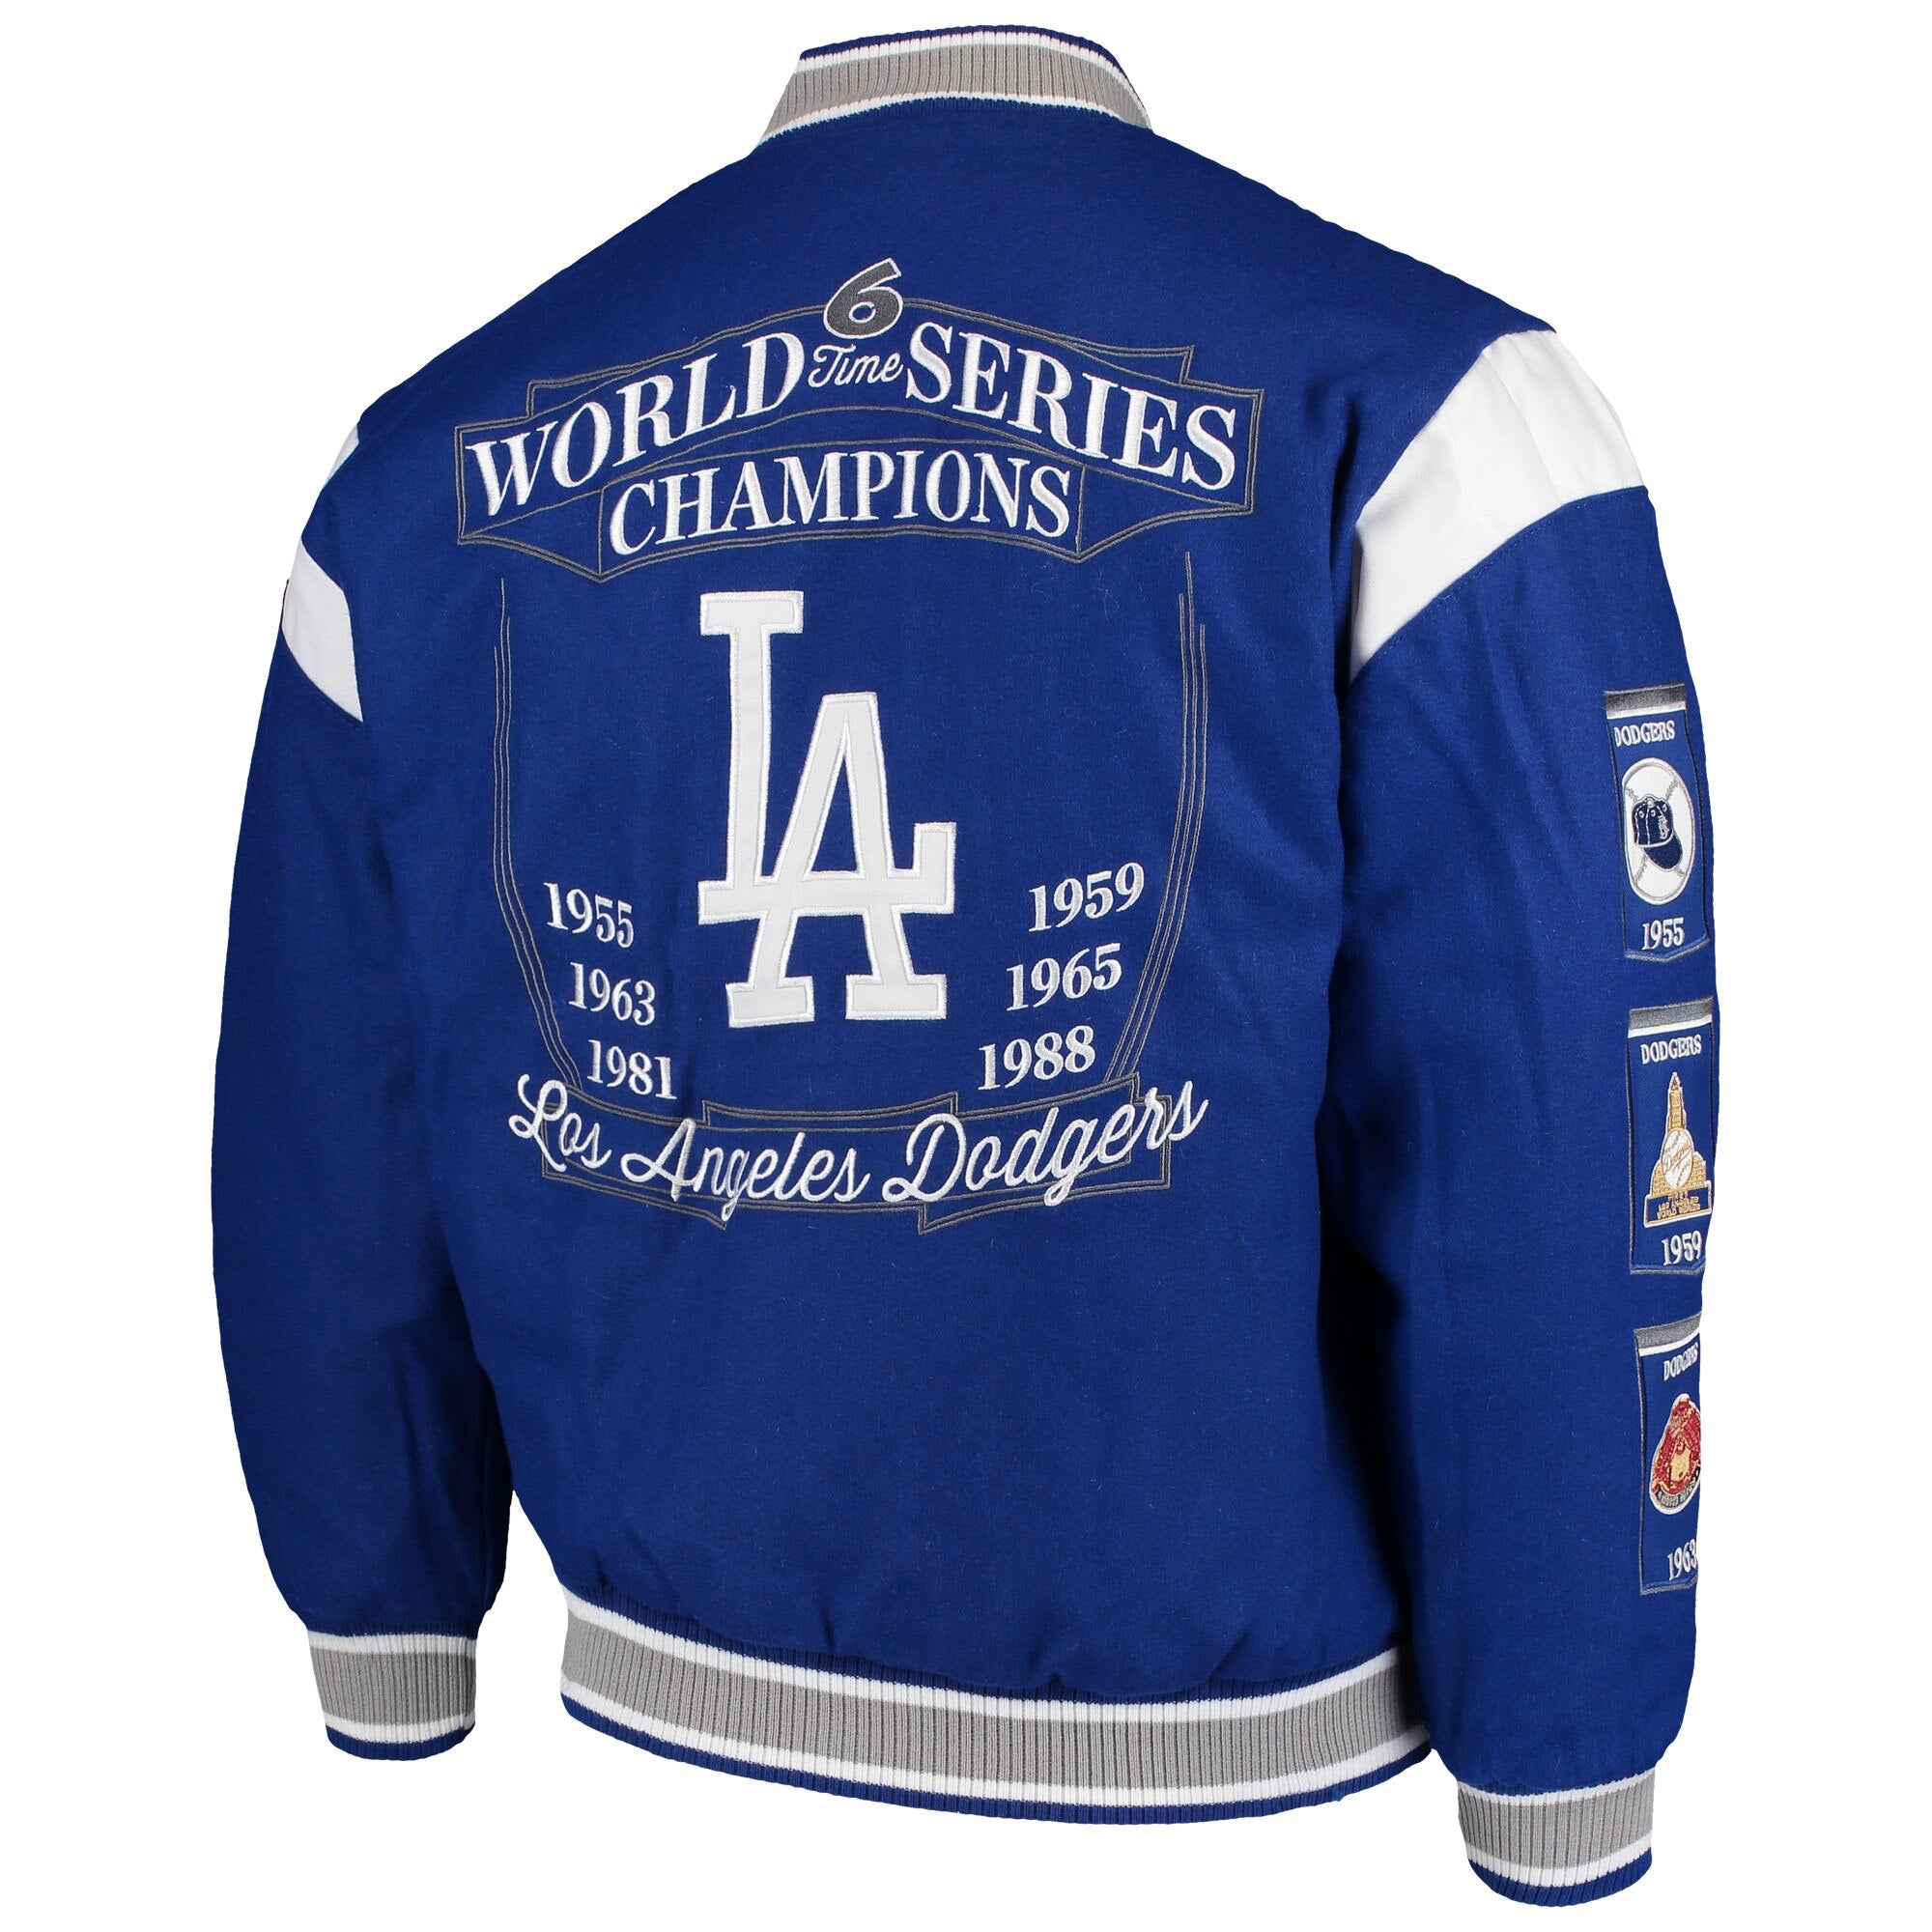 Dodgers Jackets